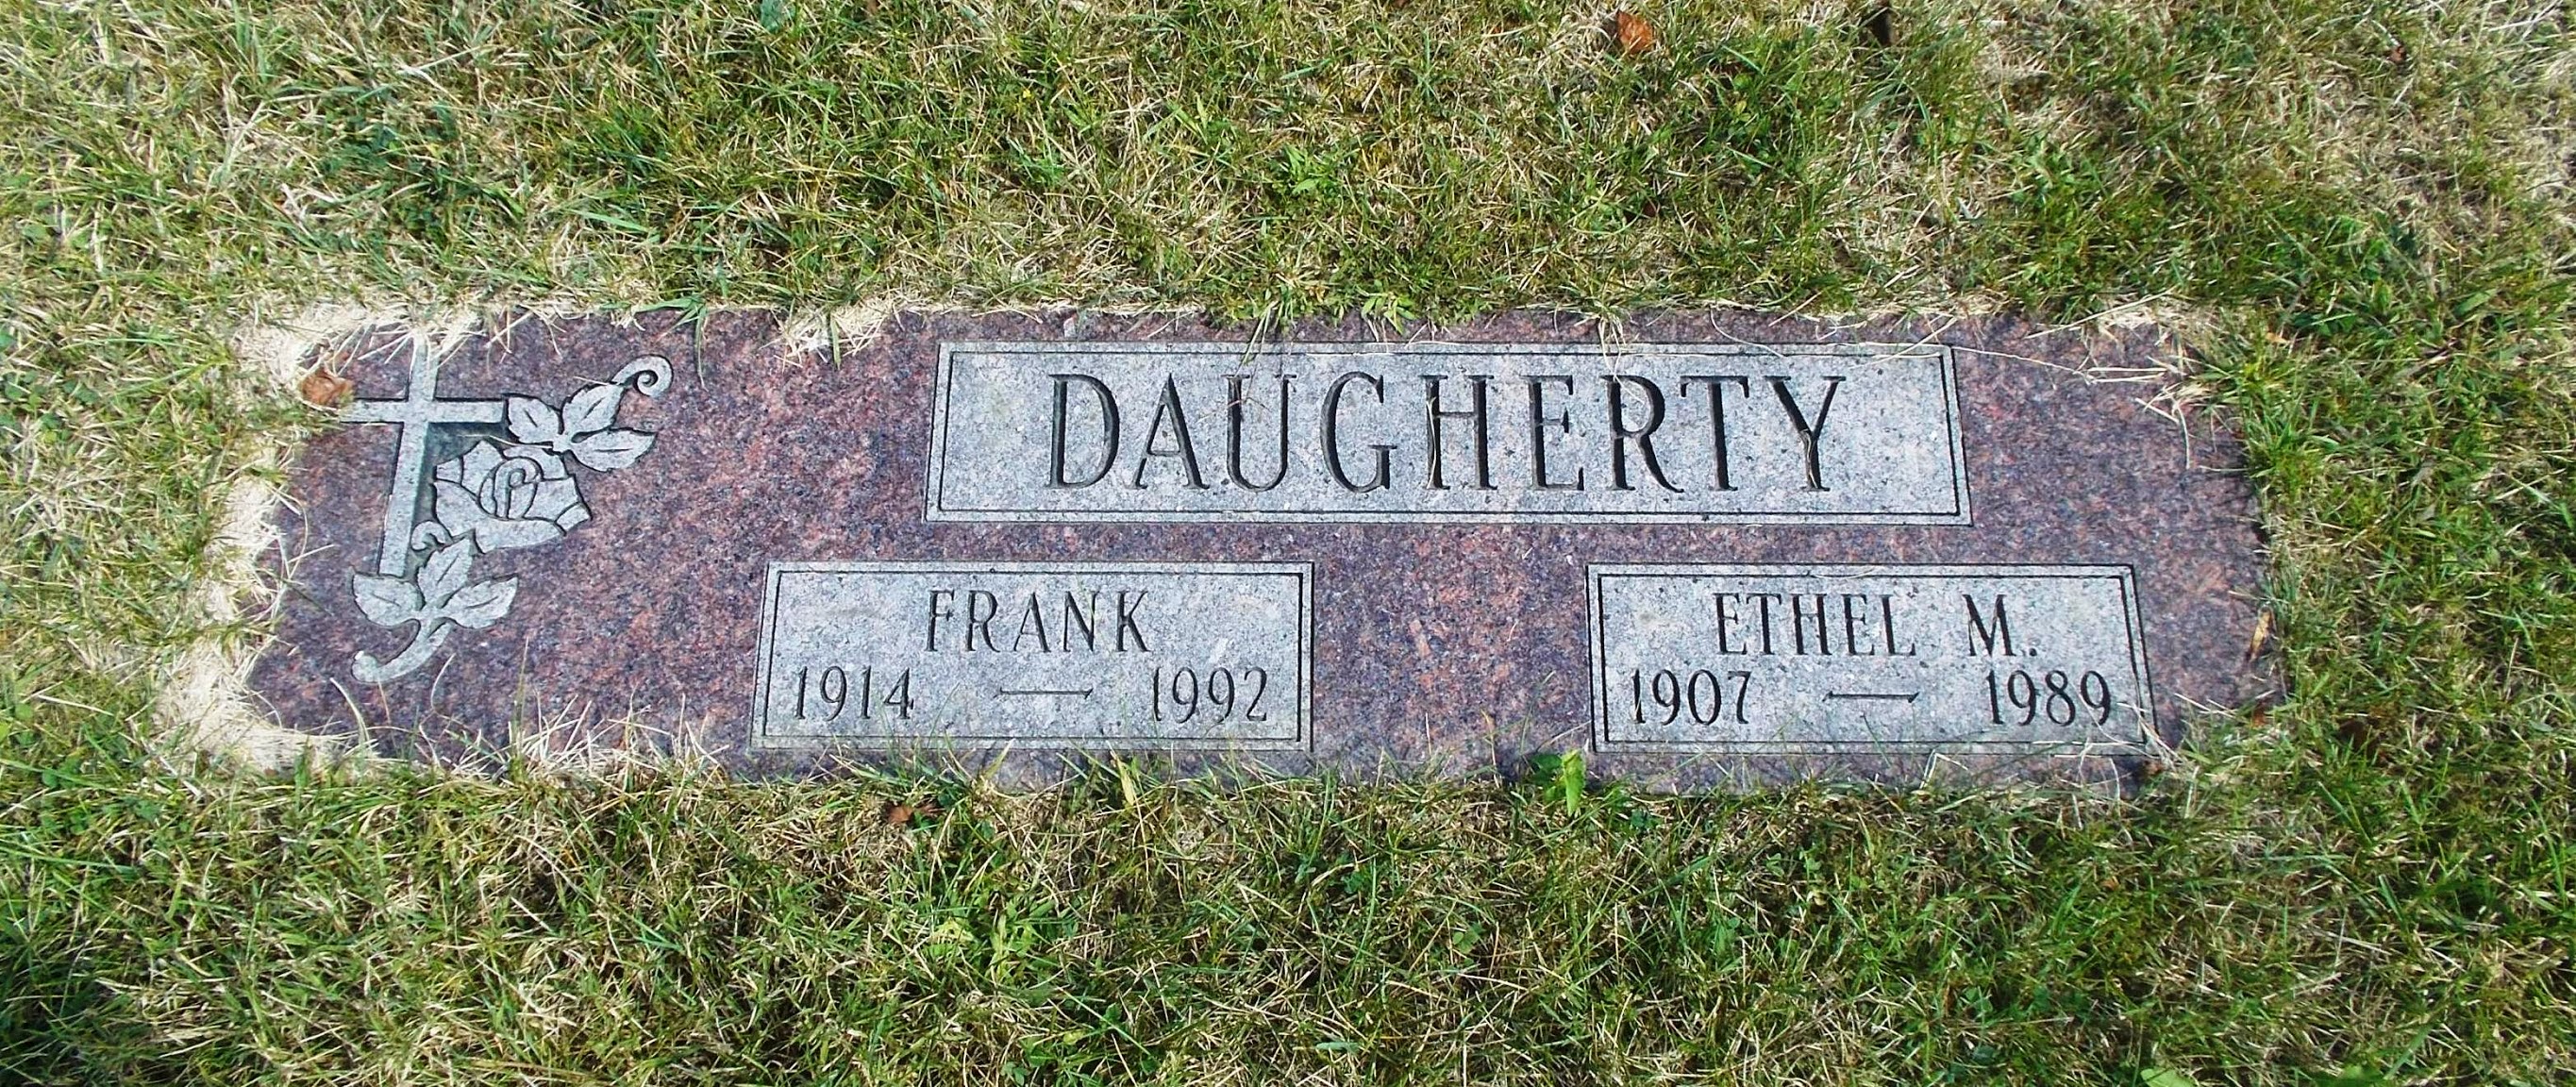 Frank Daugherty